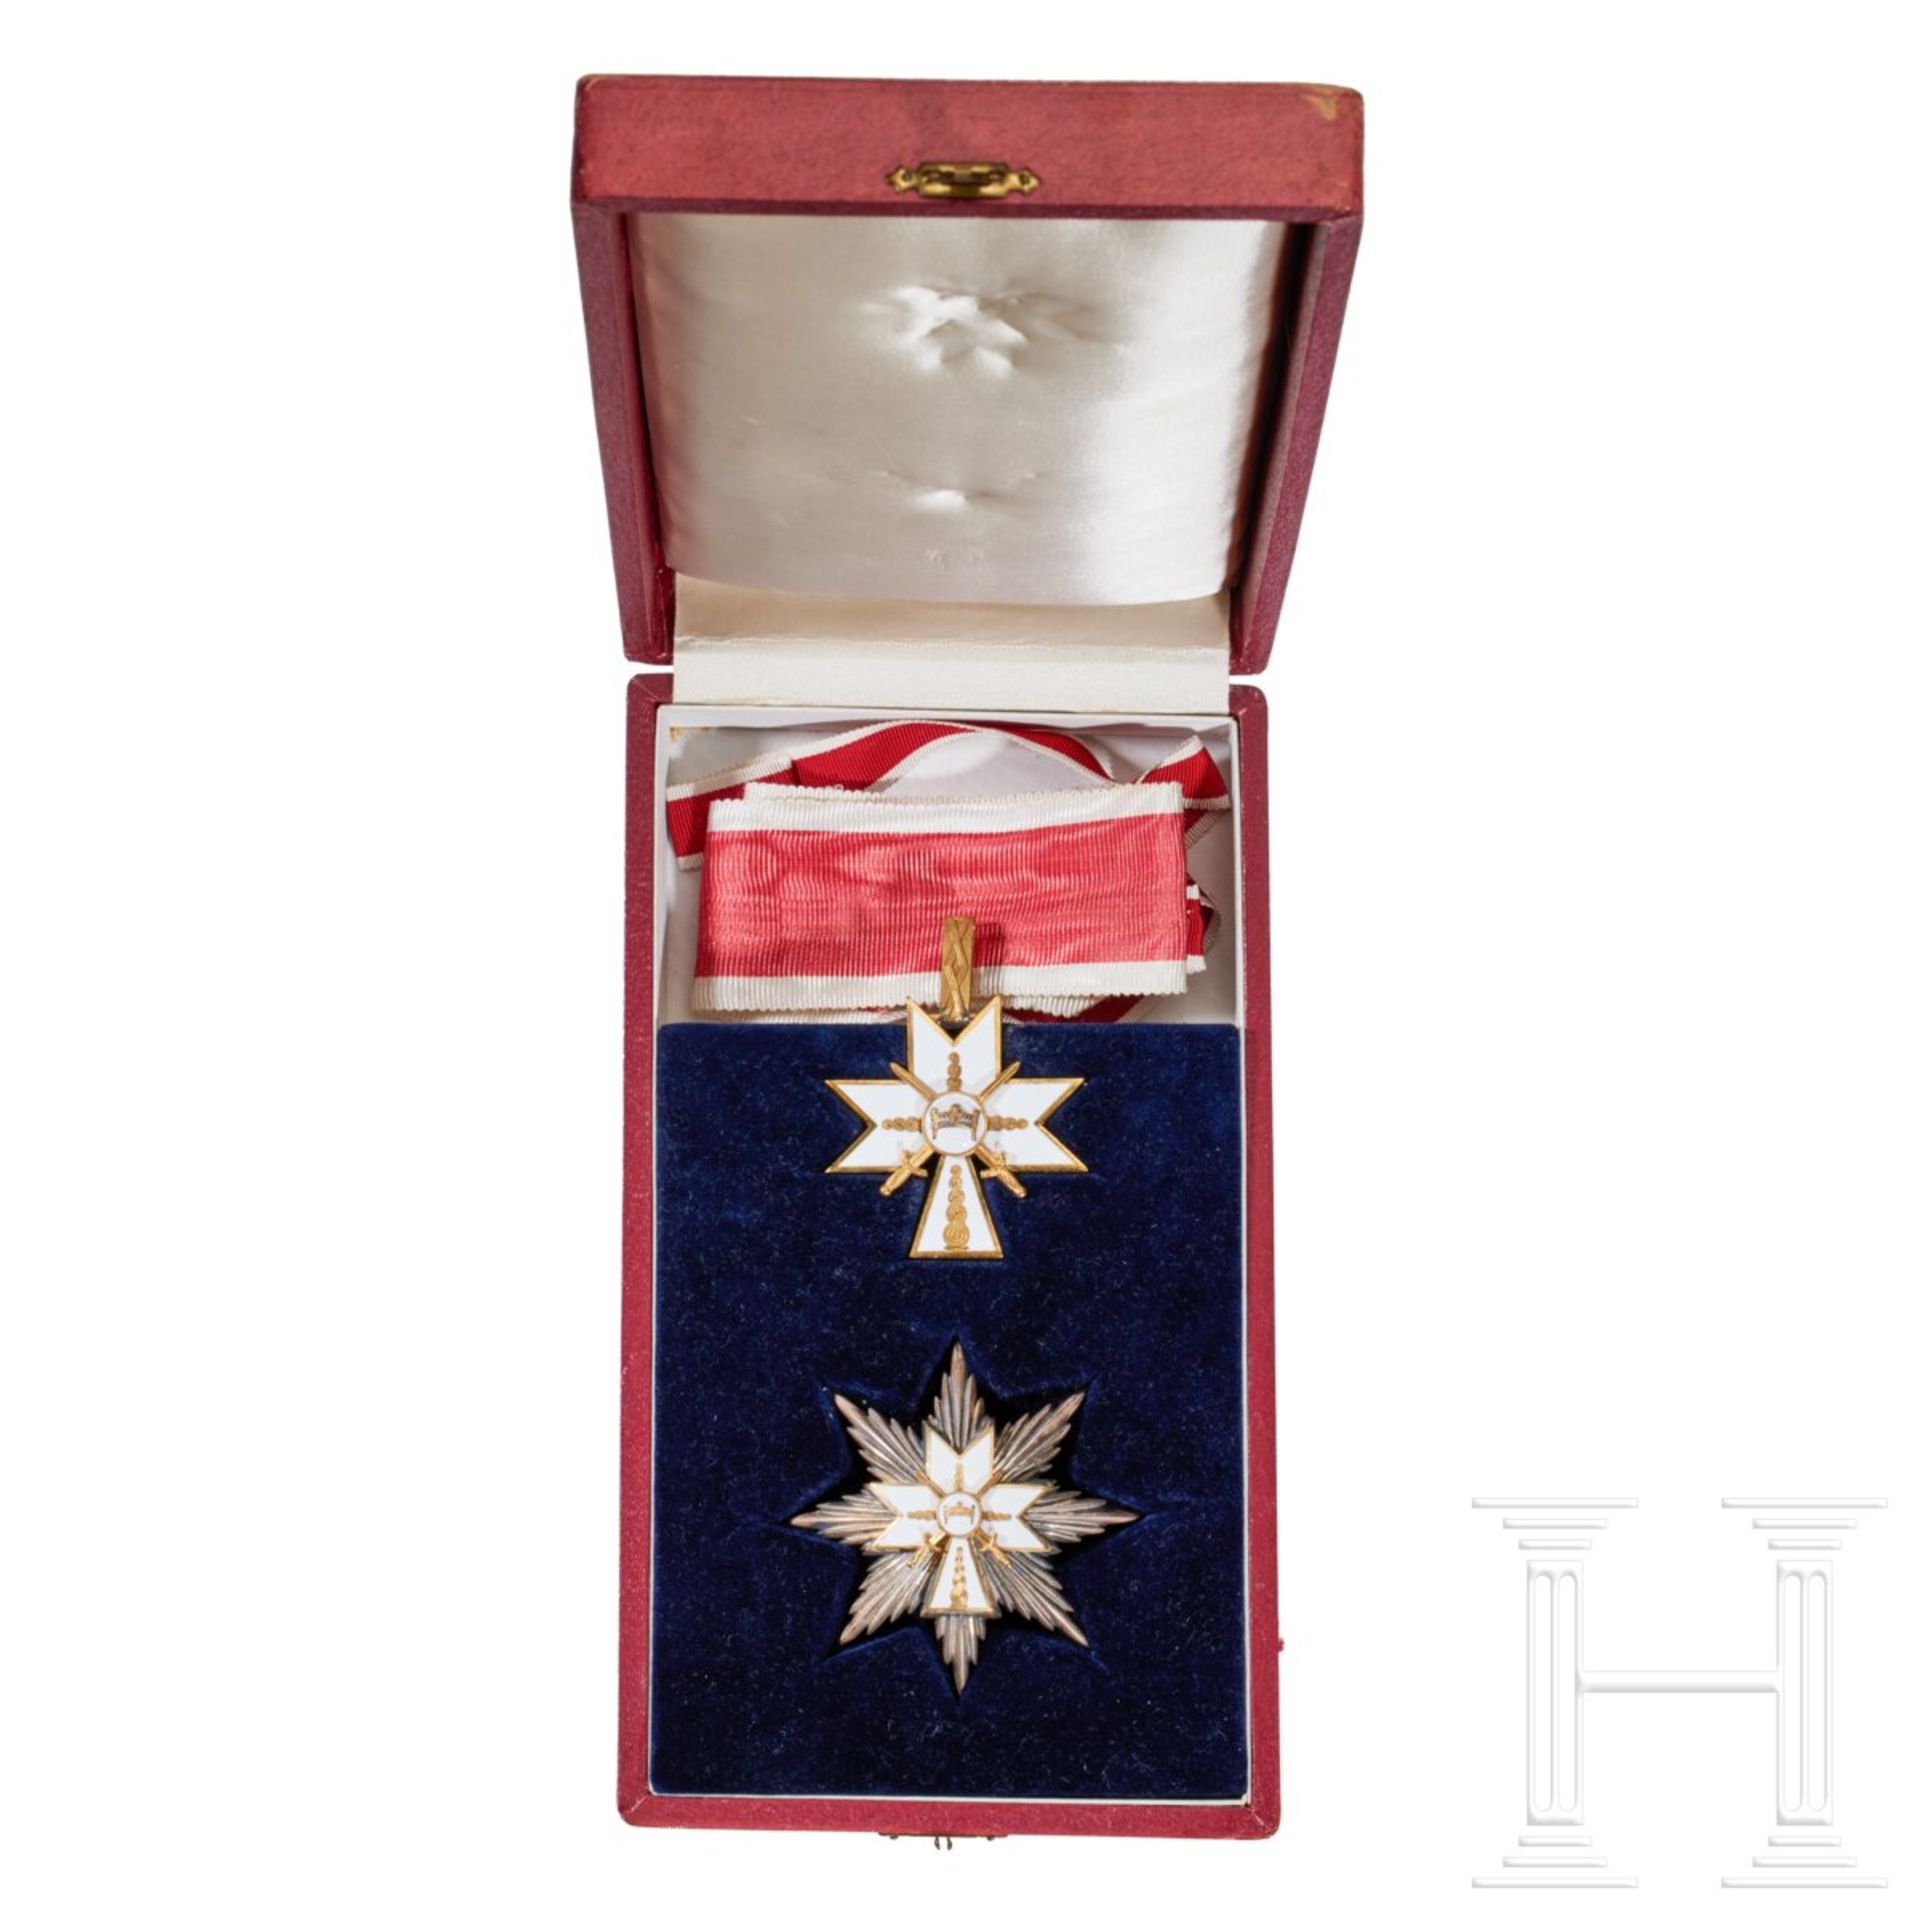 A Croatian Order of King Zvonimir 1st Class Grand Officer